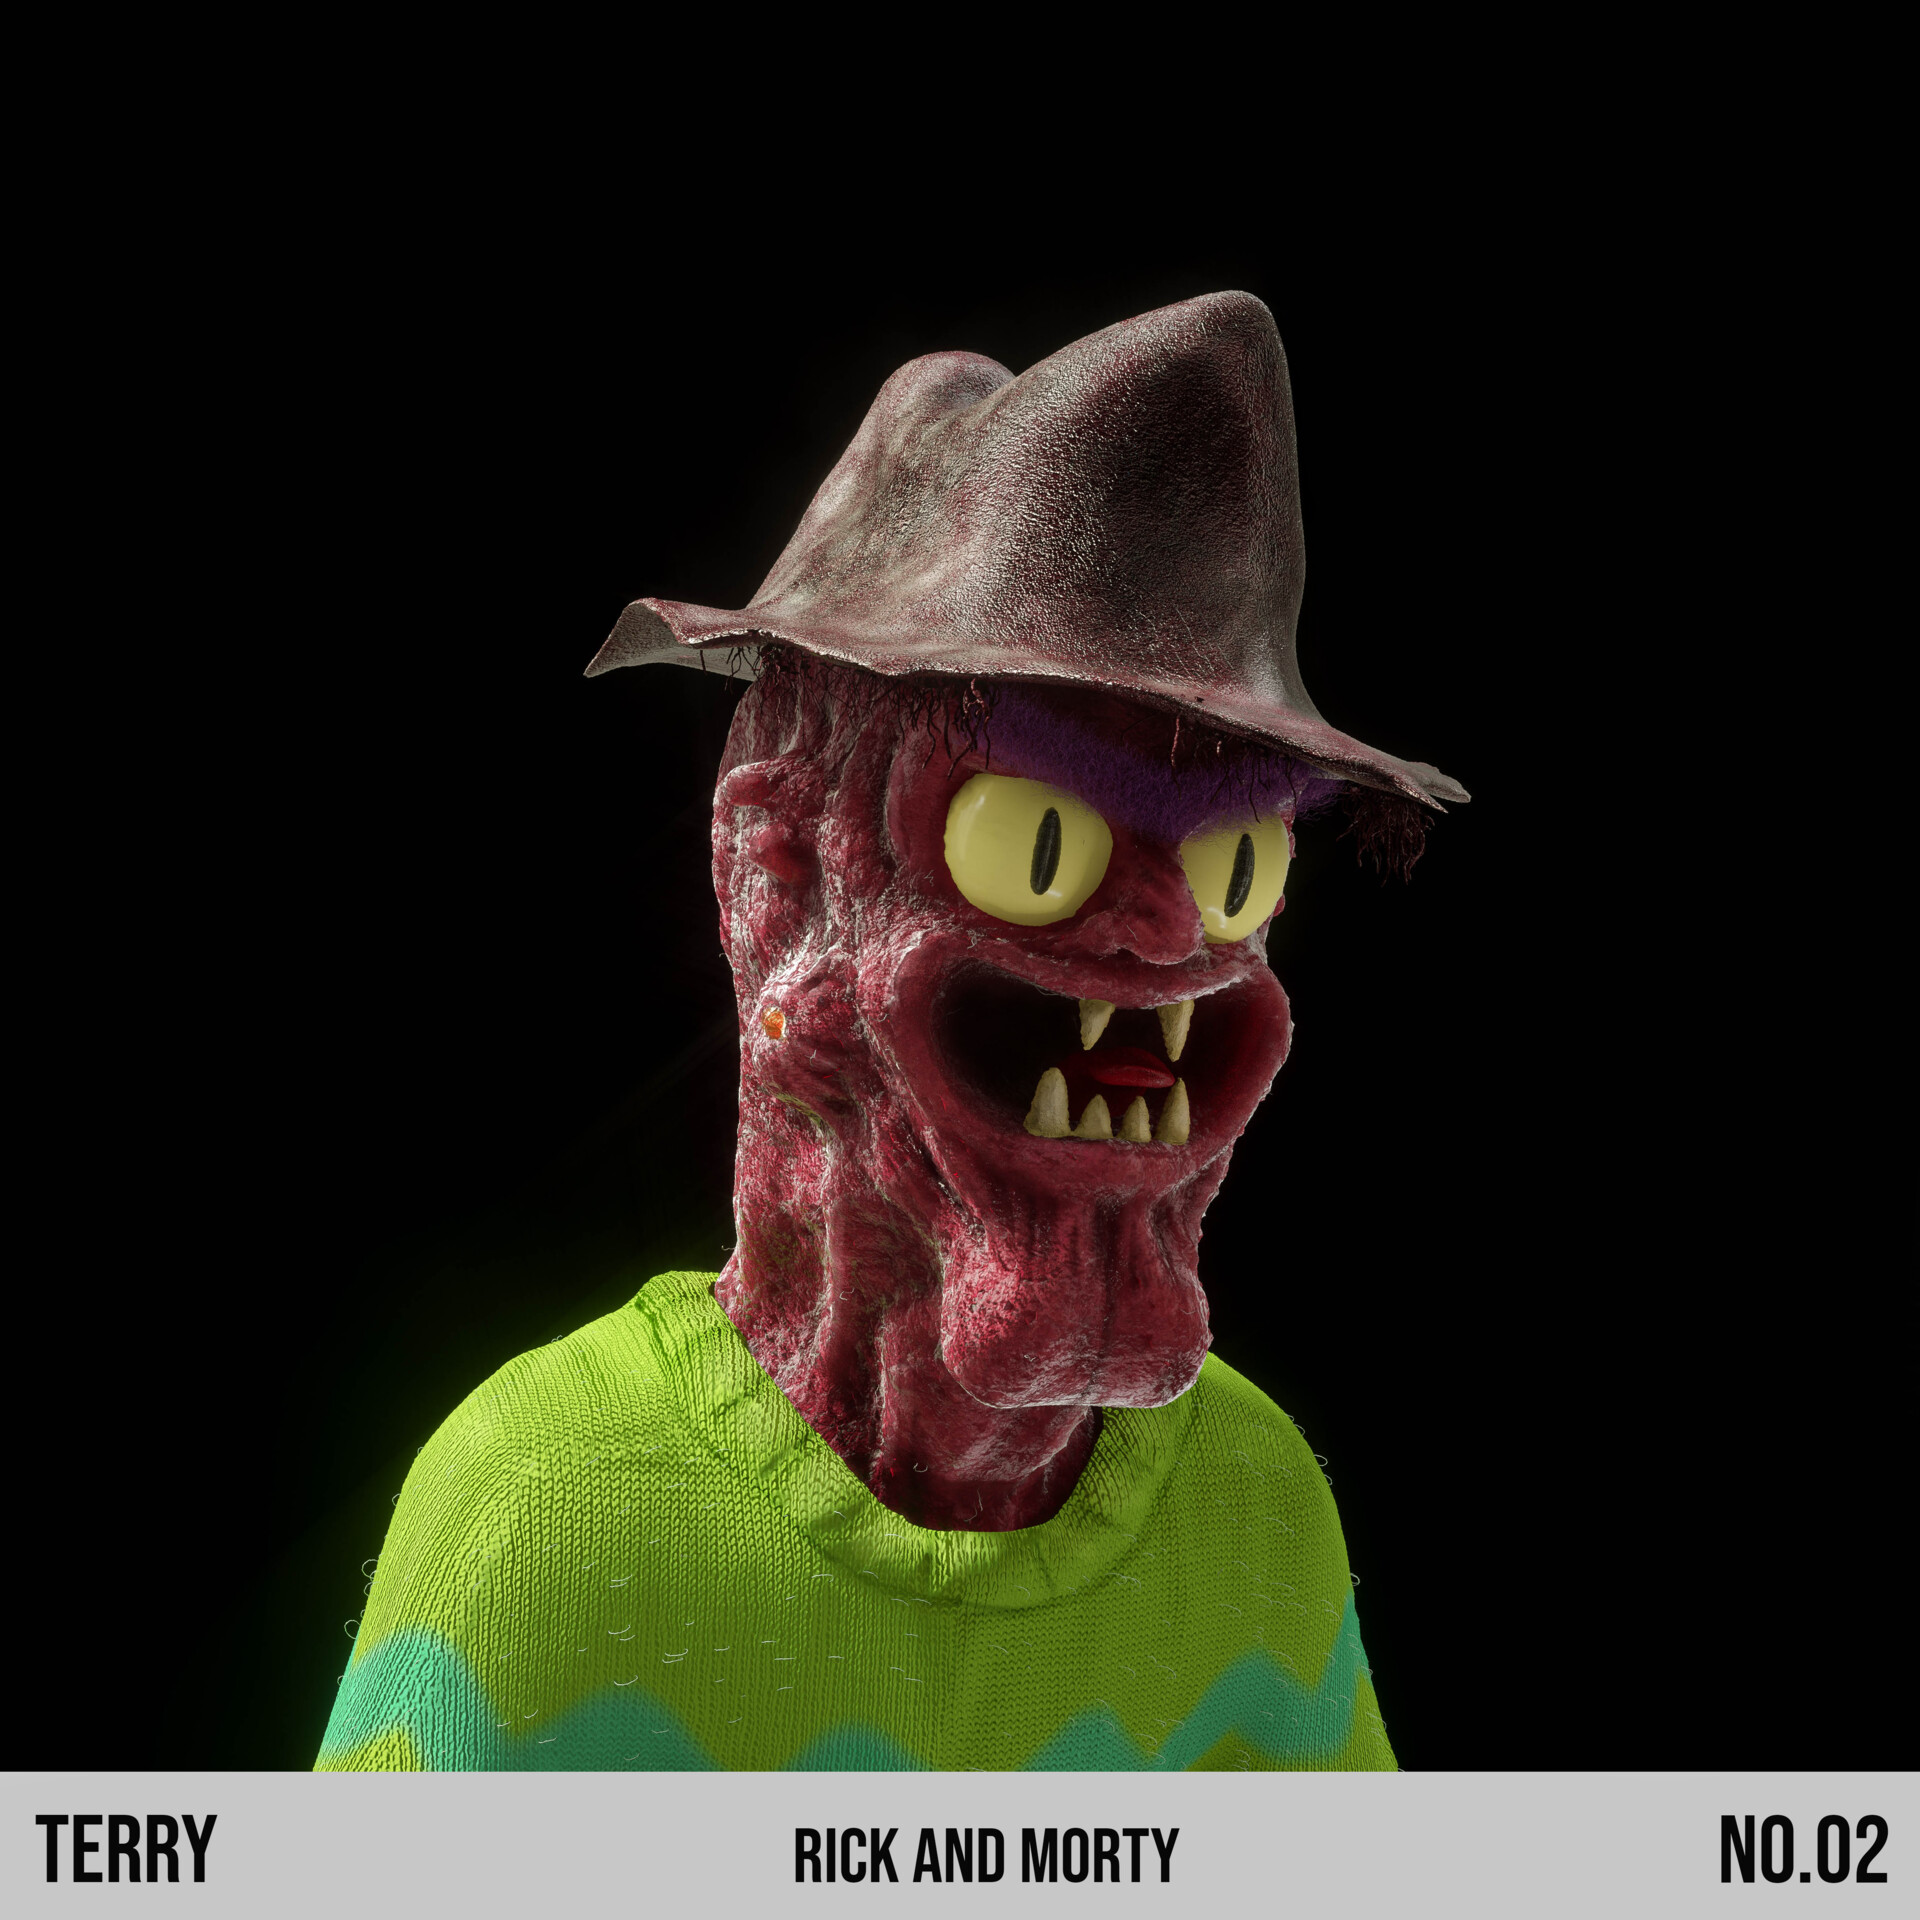 ArtStation - Scary Terry